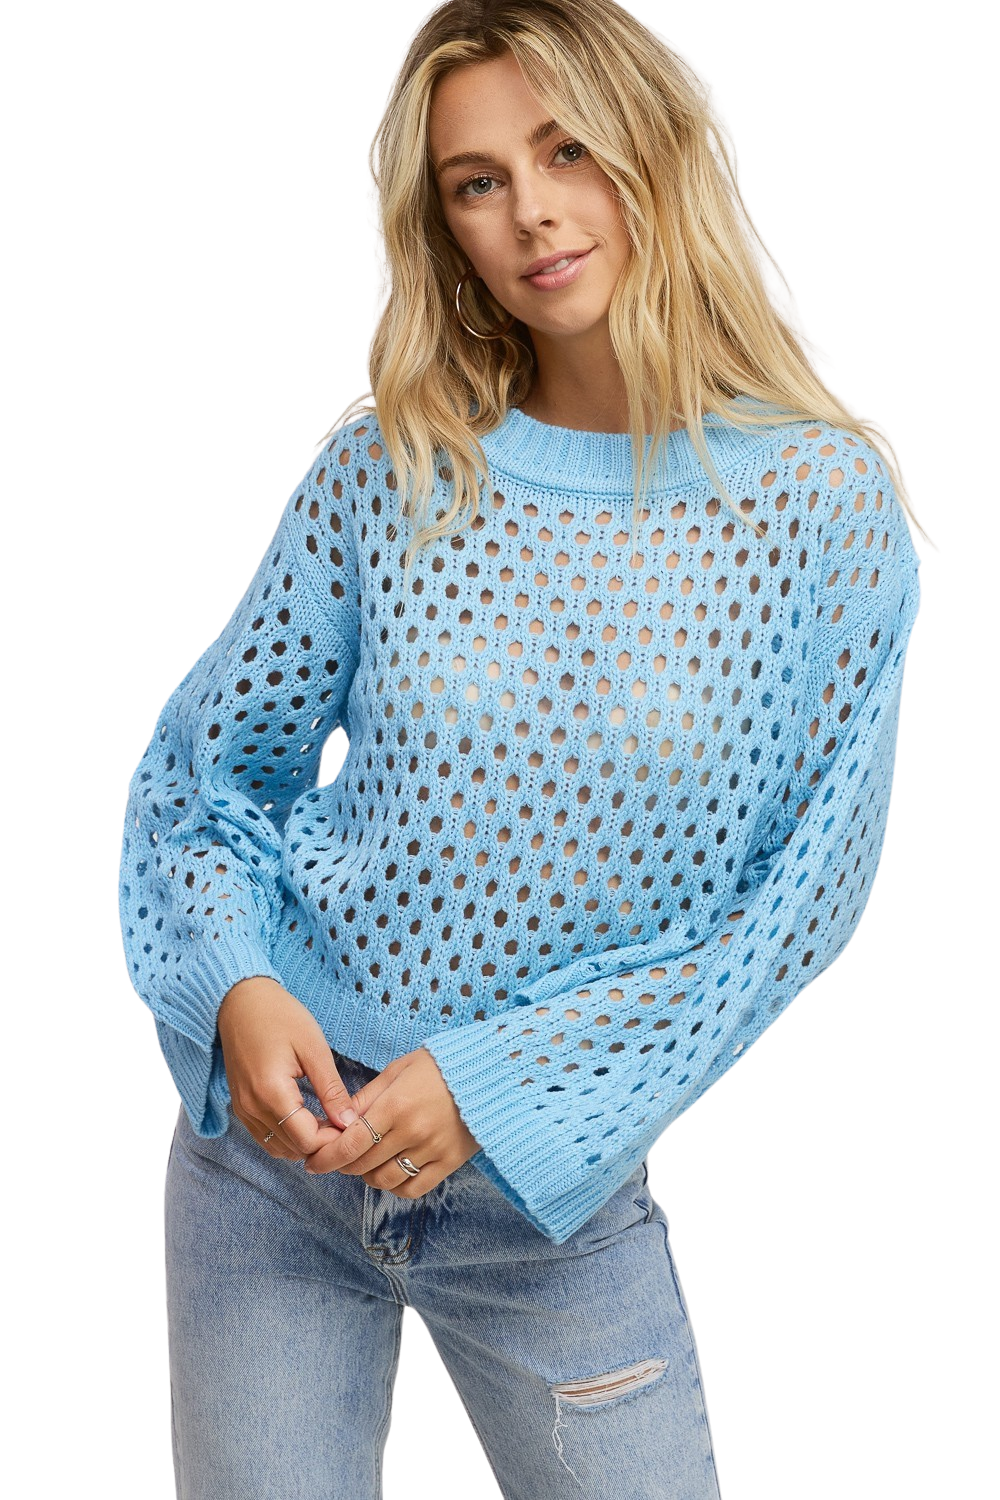 Apparel- Fanco Cool Knit Sweater